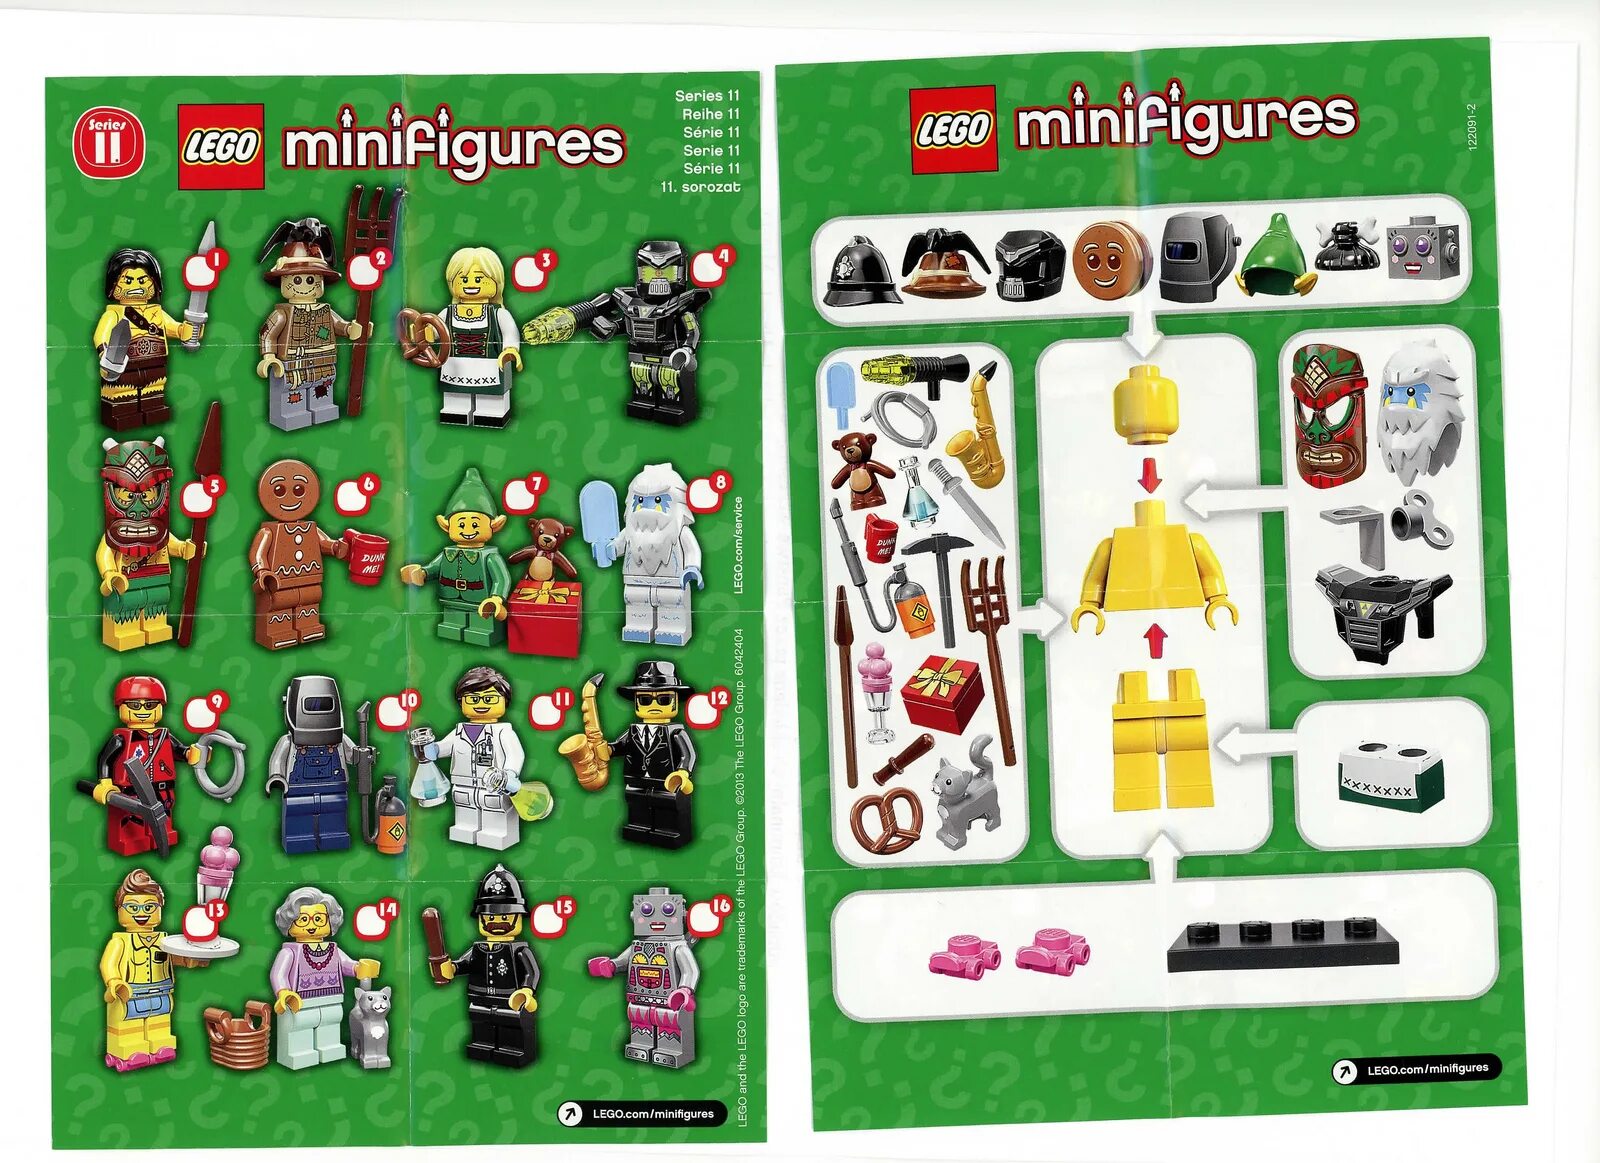 Series 11. LEGO Minifigures Series 11. LEGO Minifigures 22 Series вкладыш. LEGO Minifigures 11. 11 Серия минифигурок лего.